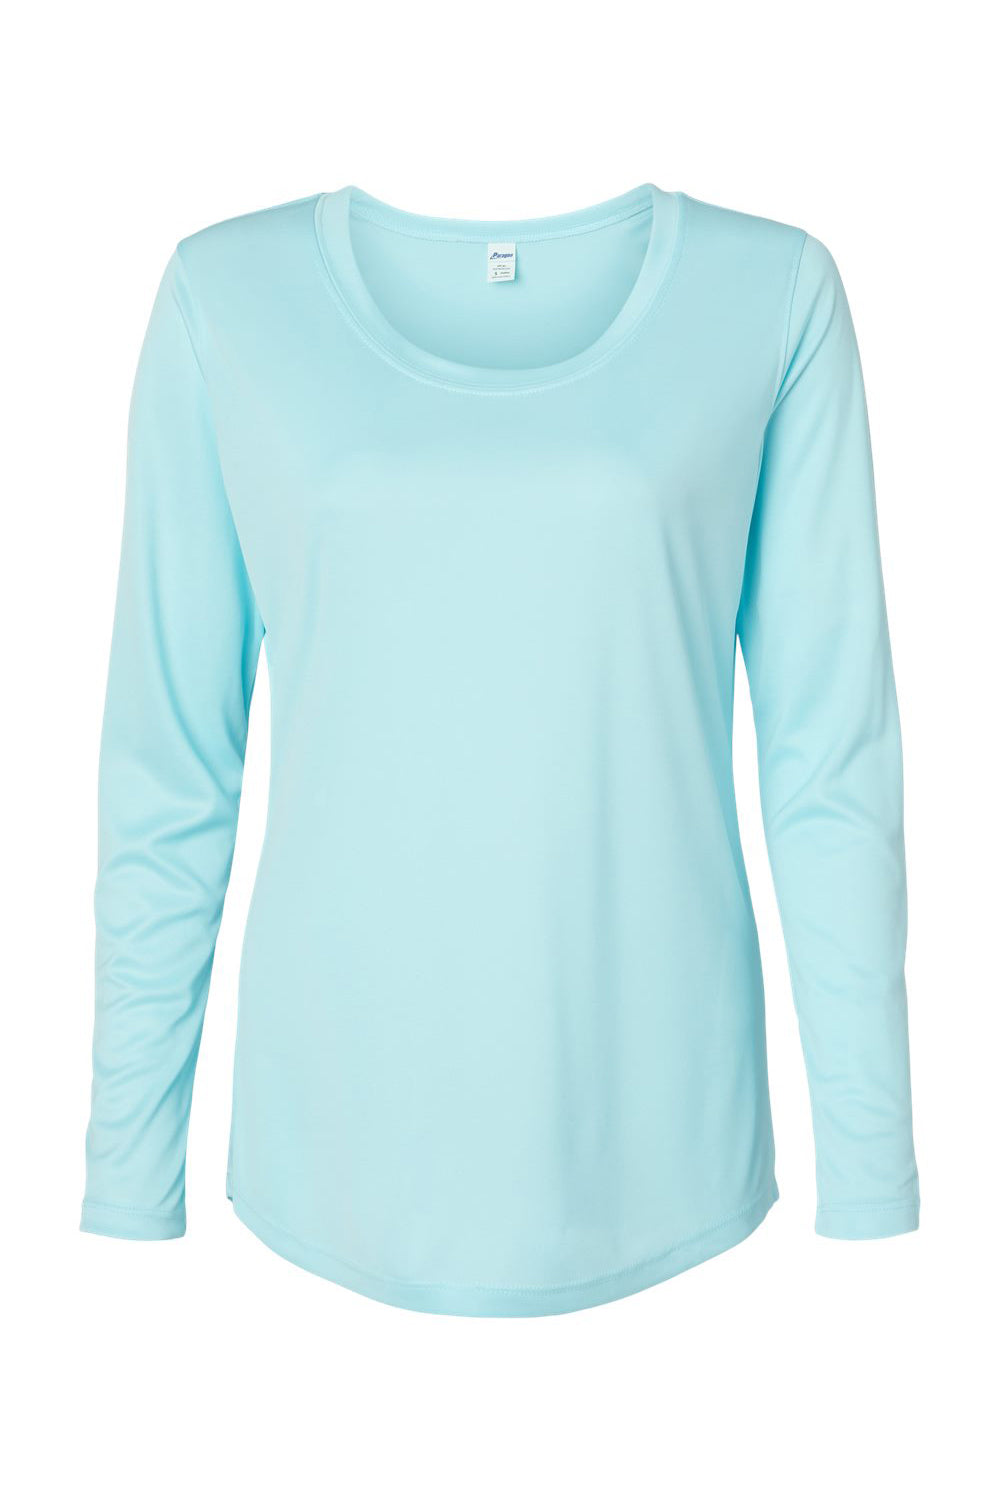 Paragon 214 Womens Islander Performance Long Sleeve Scoop Neck T-Shirt Aqua Blue Flat Front